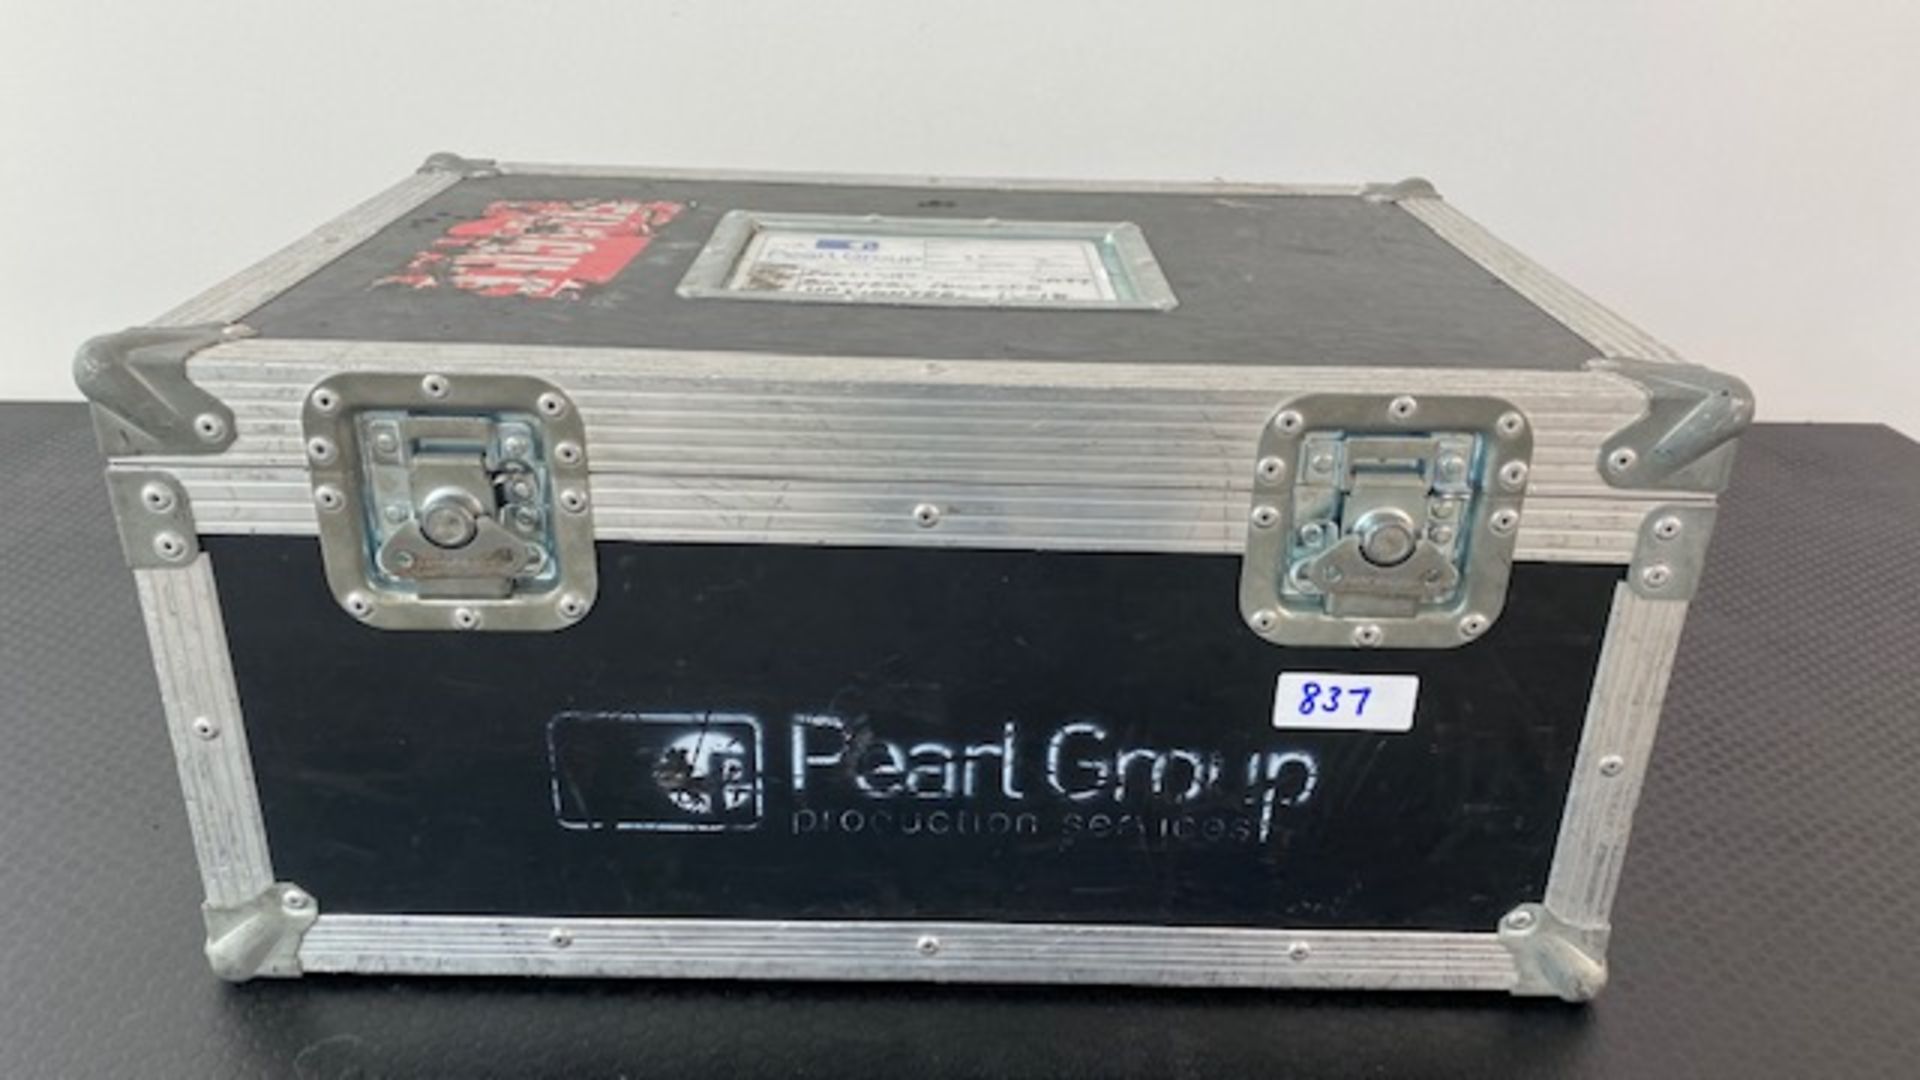 6 x Pro Lights Smart Bat Battery Powered Uplighters In Flight Case - Ref: 837 - CL581 - Location: